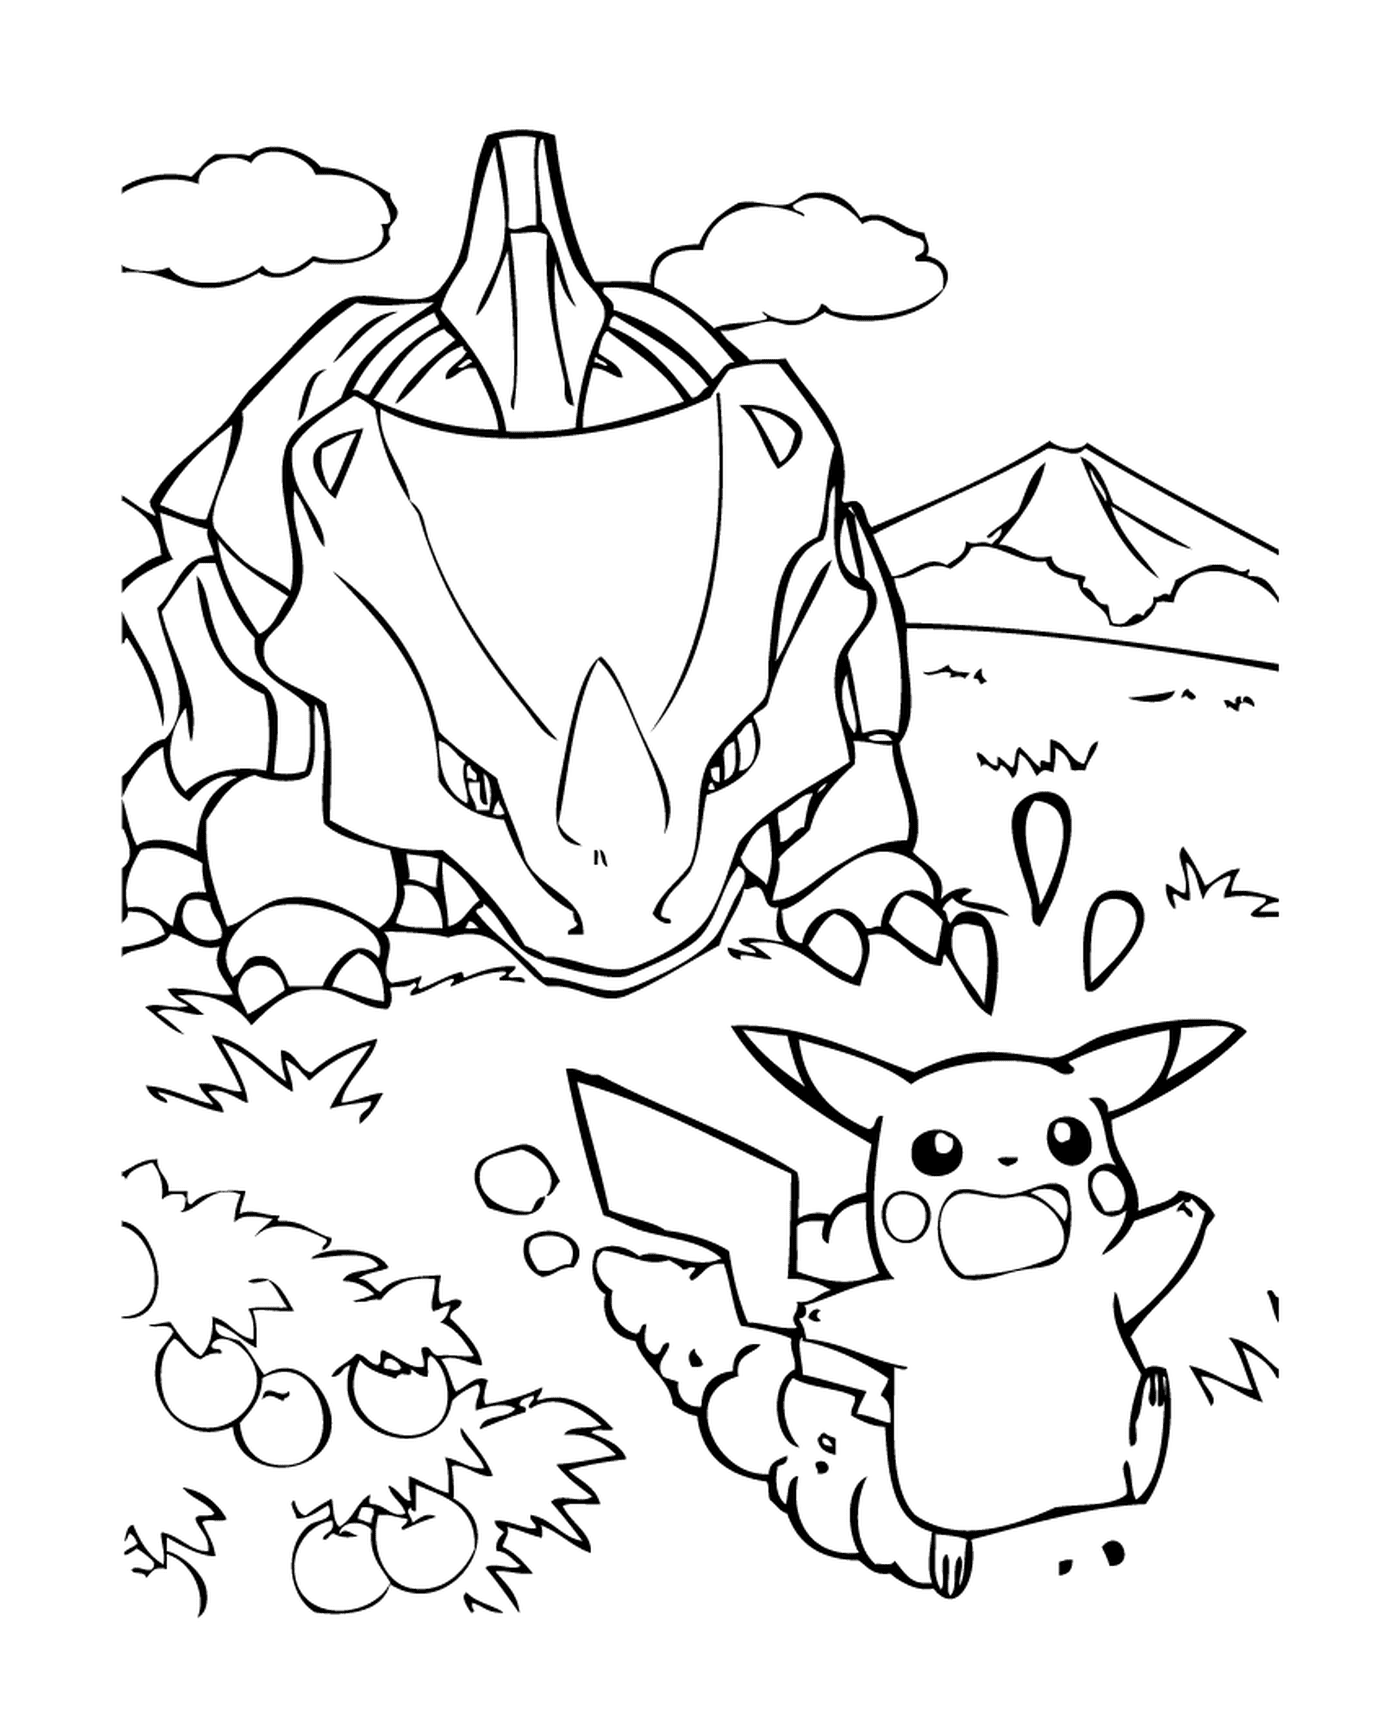  Pikachu and a dragon meet 